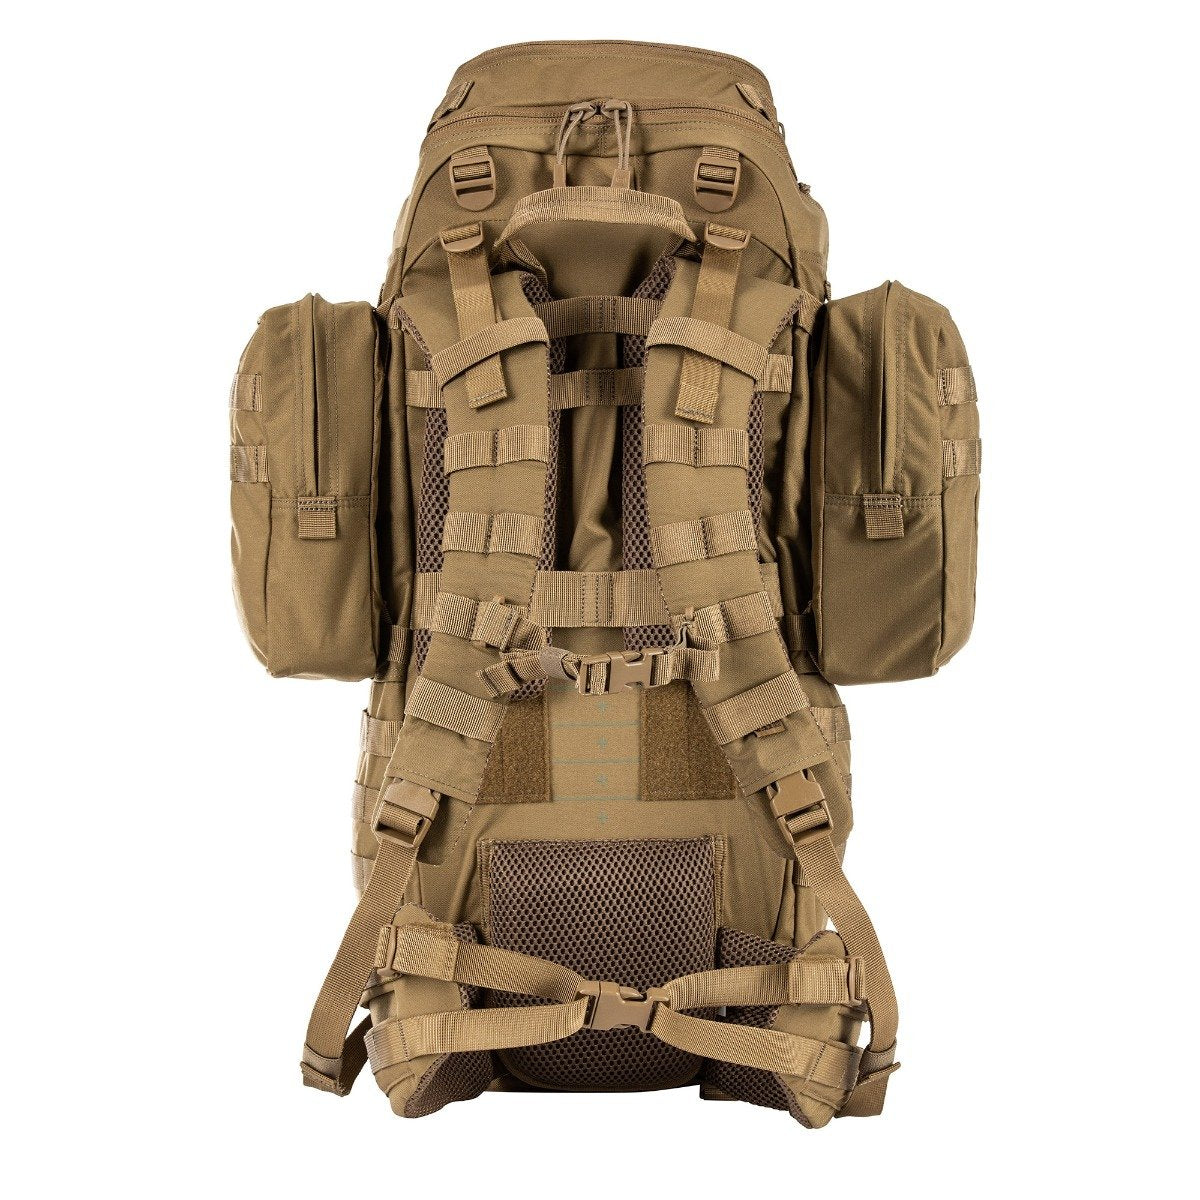 5.11 Tactical Rush 100 60L Backpack Kangaroo